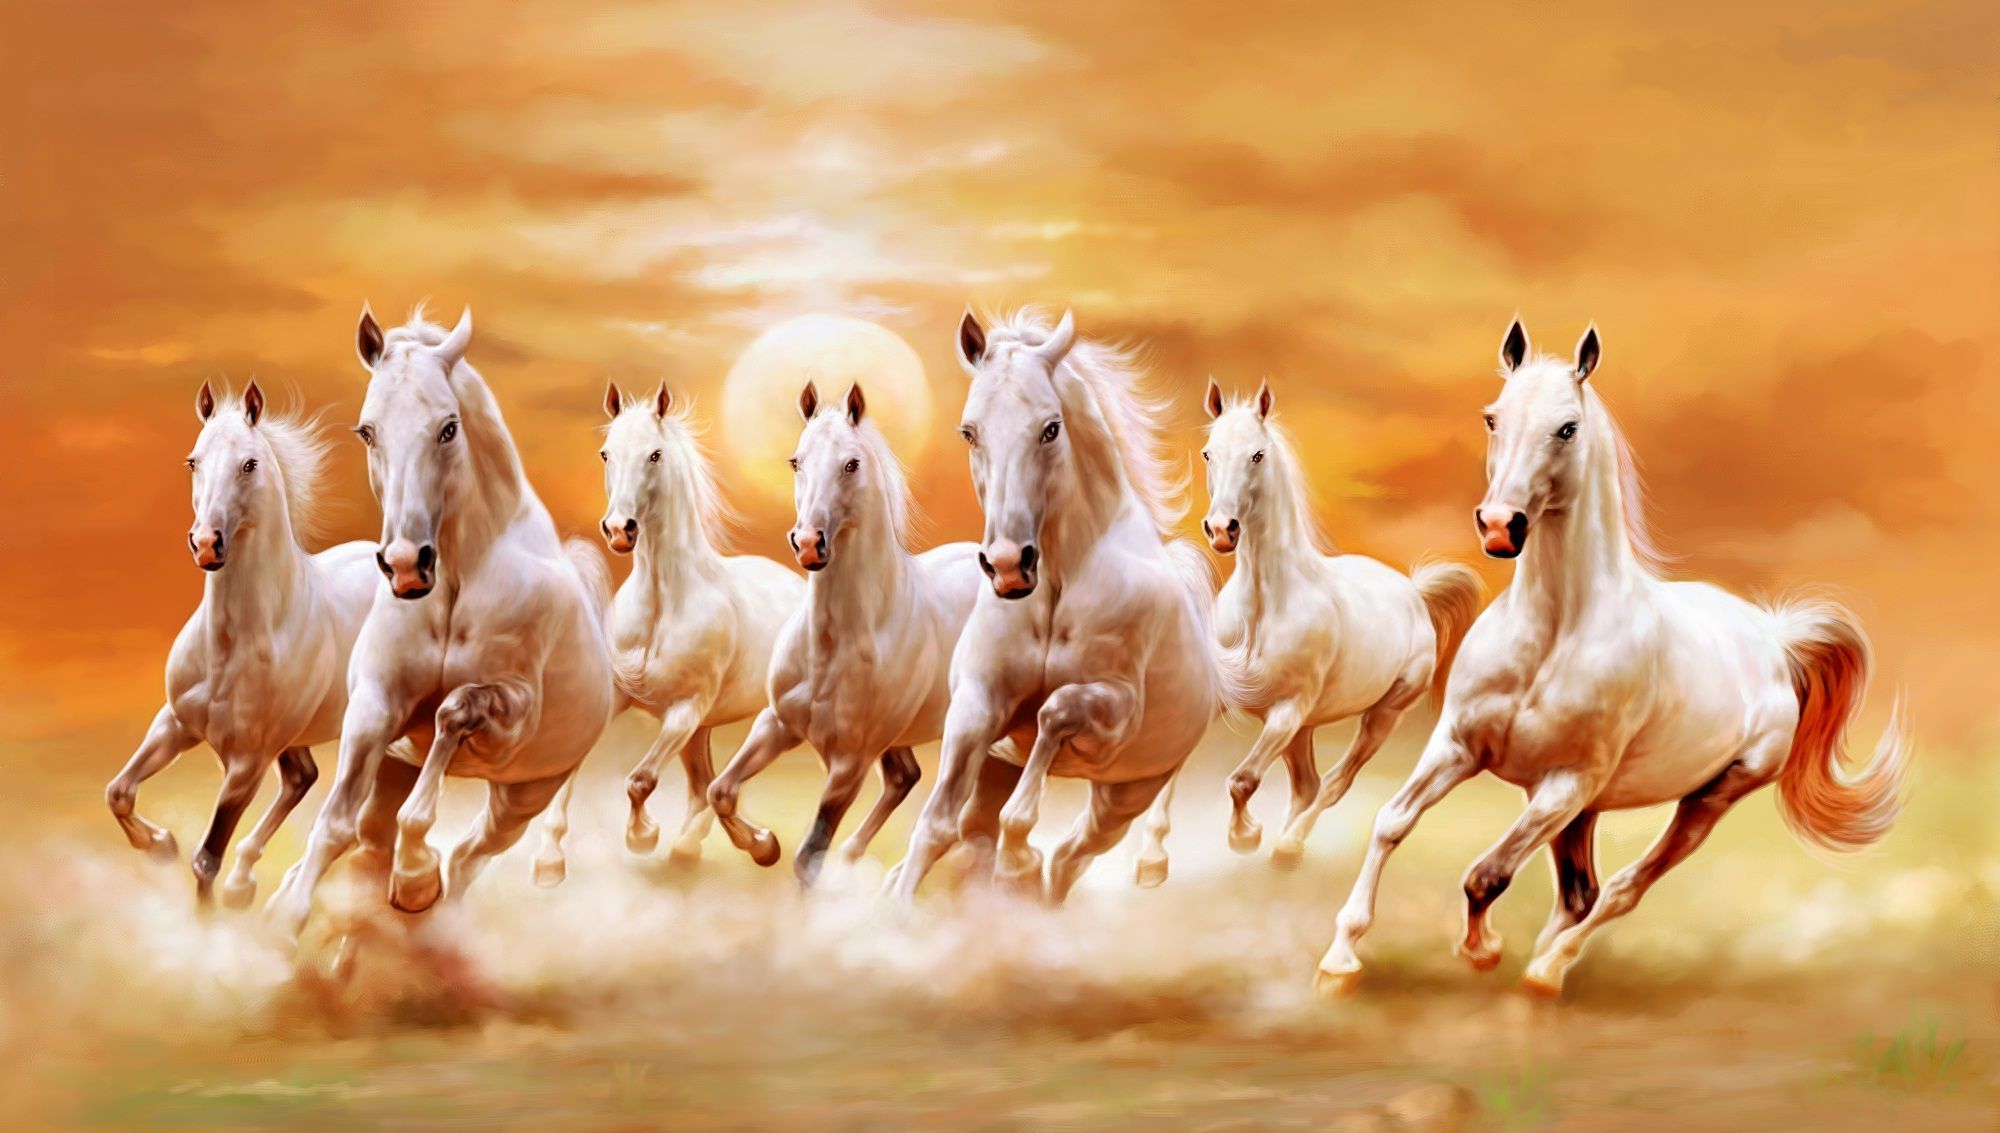 Seven Horse Wallpaper | Images Wallpapers | Pinterest | Horse ...